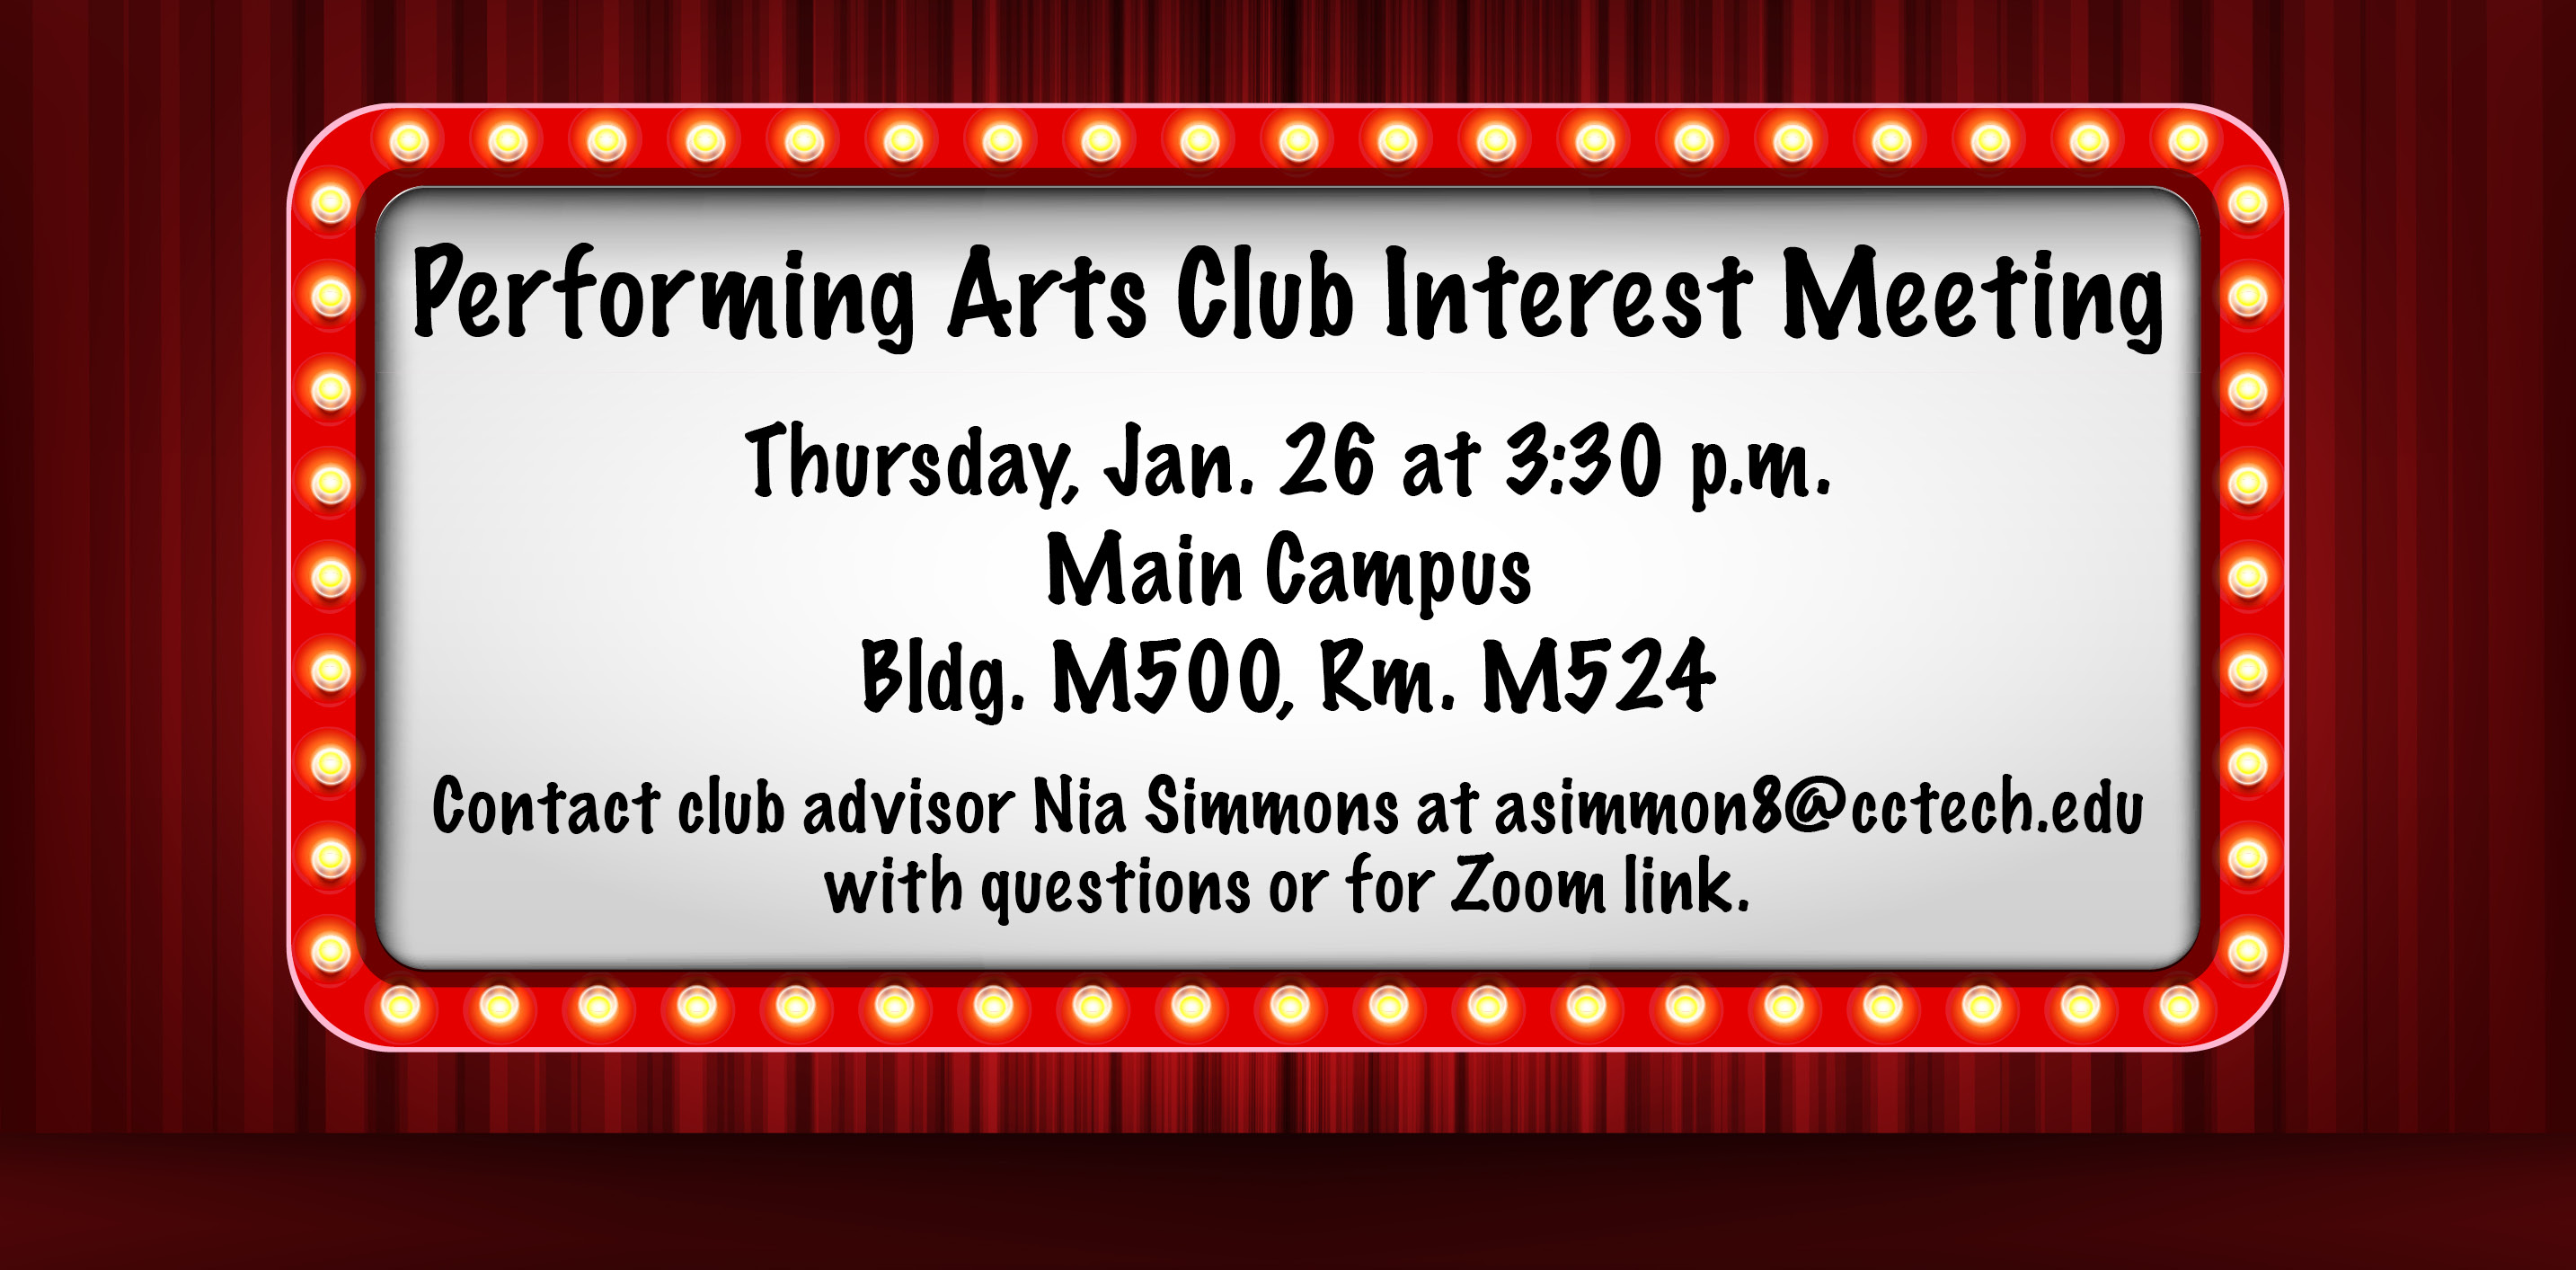 Performing arts interest meeting